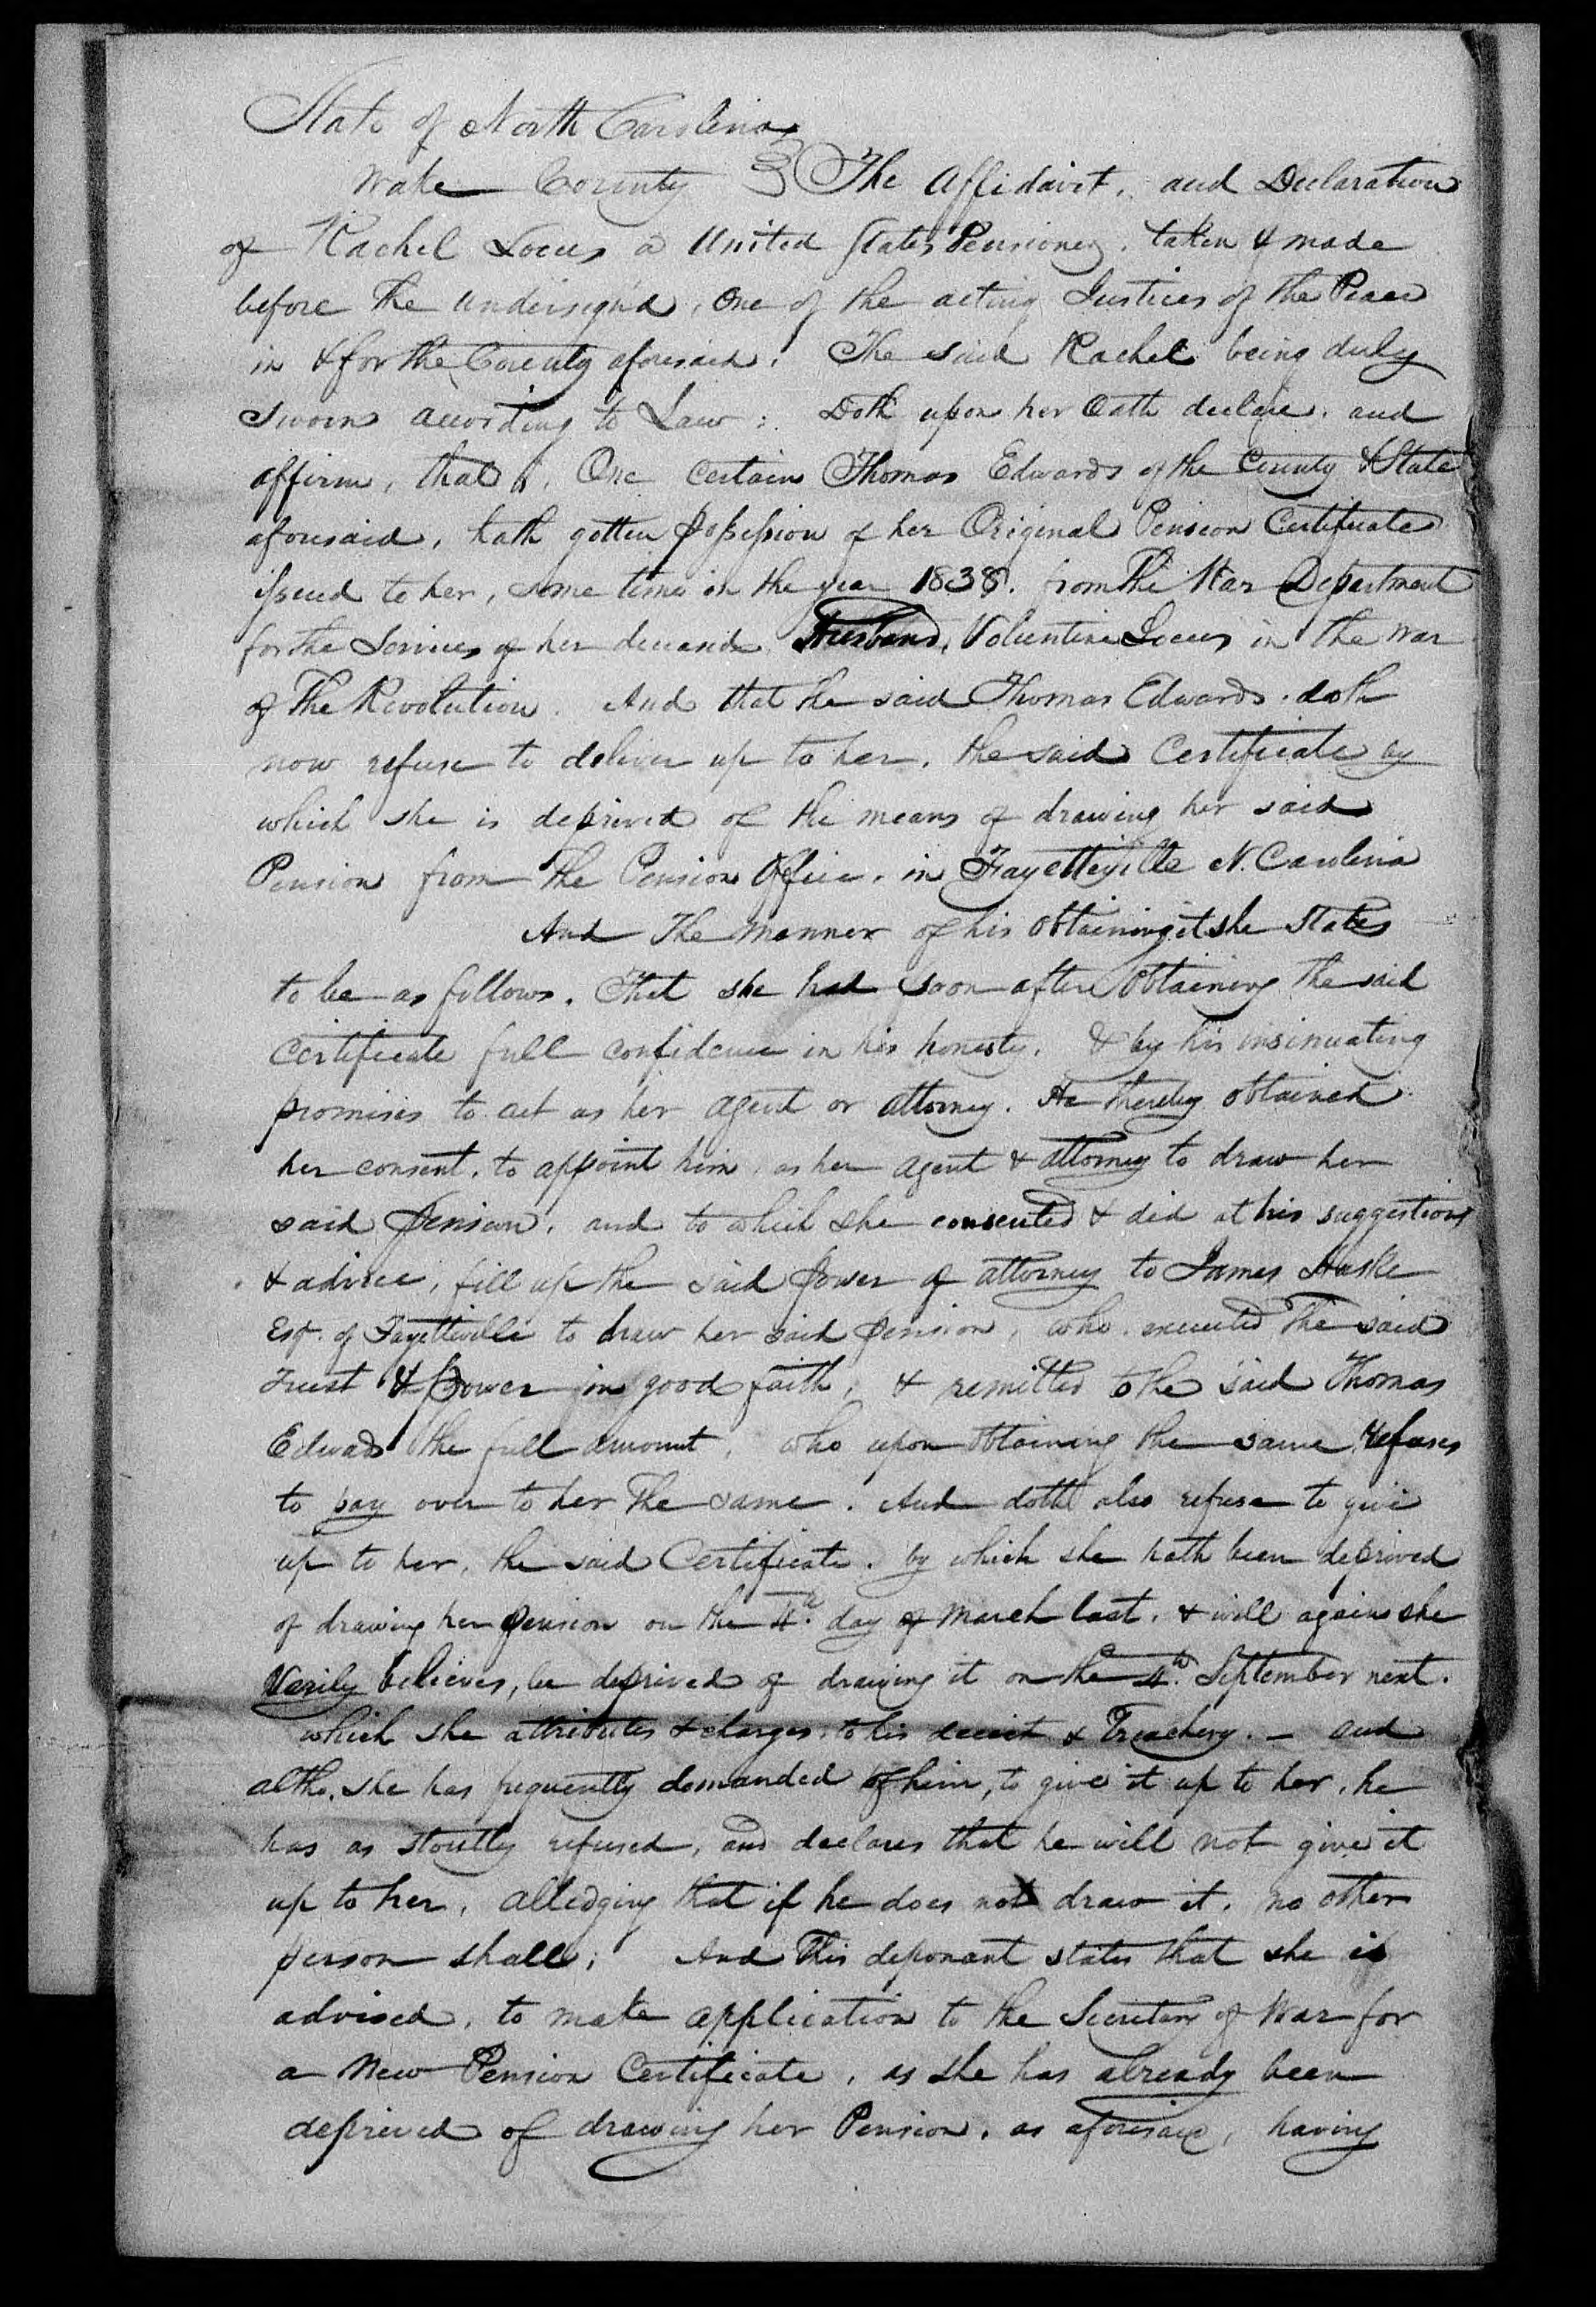 Affidavit of Rachel Locus concerning her Pension Claim, 6 August 1839, page 1